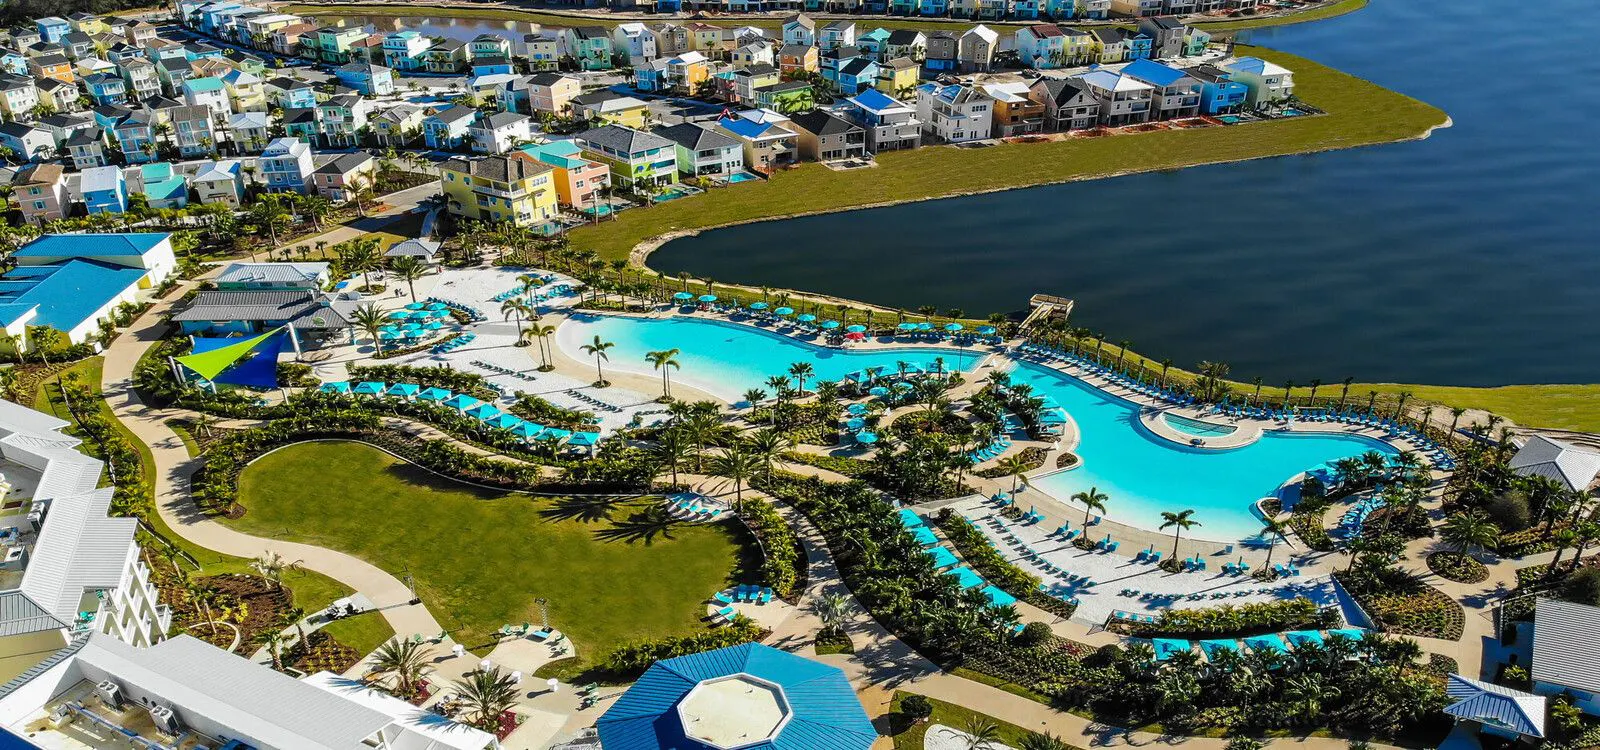 Orlando resorts in Florida. Aerial view of Margaritaville